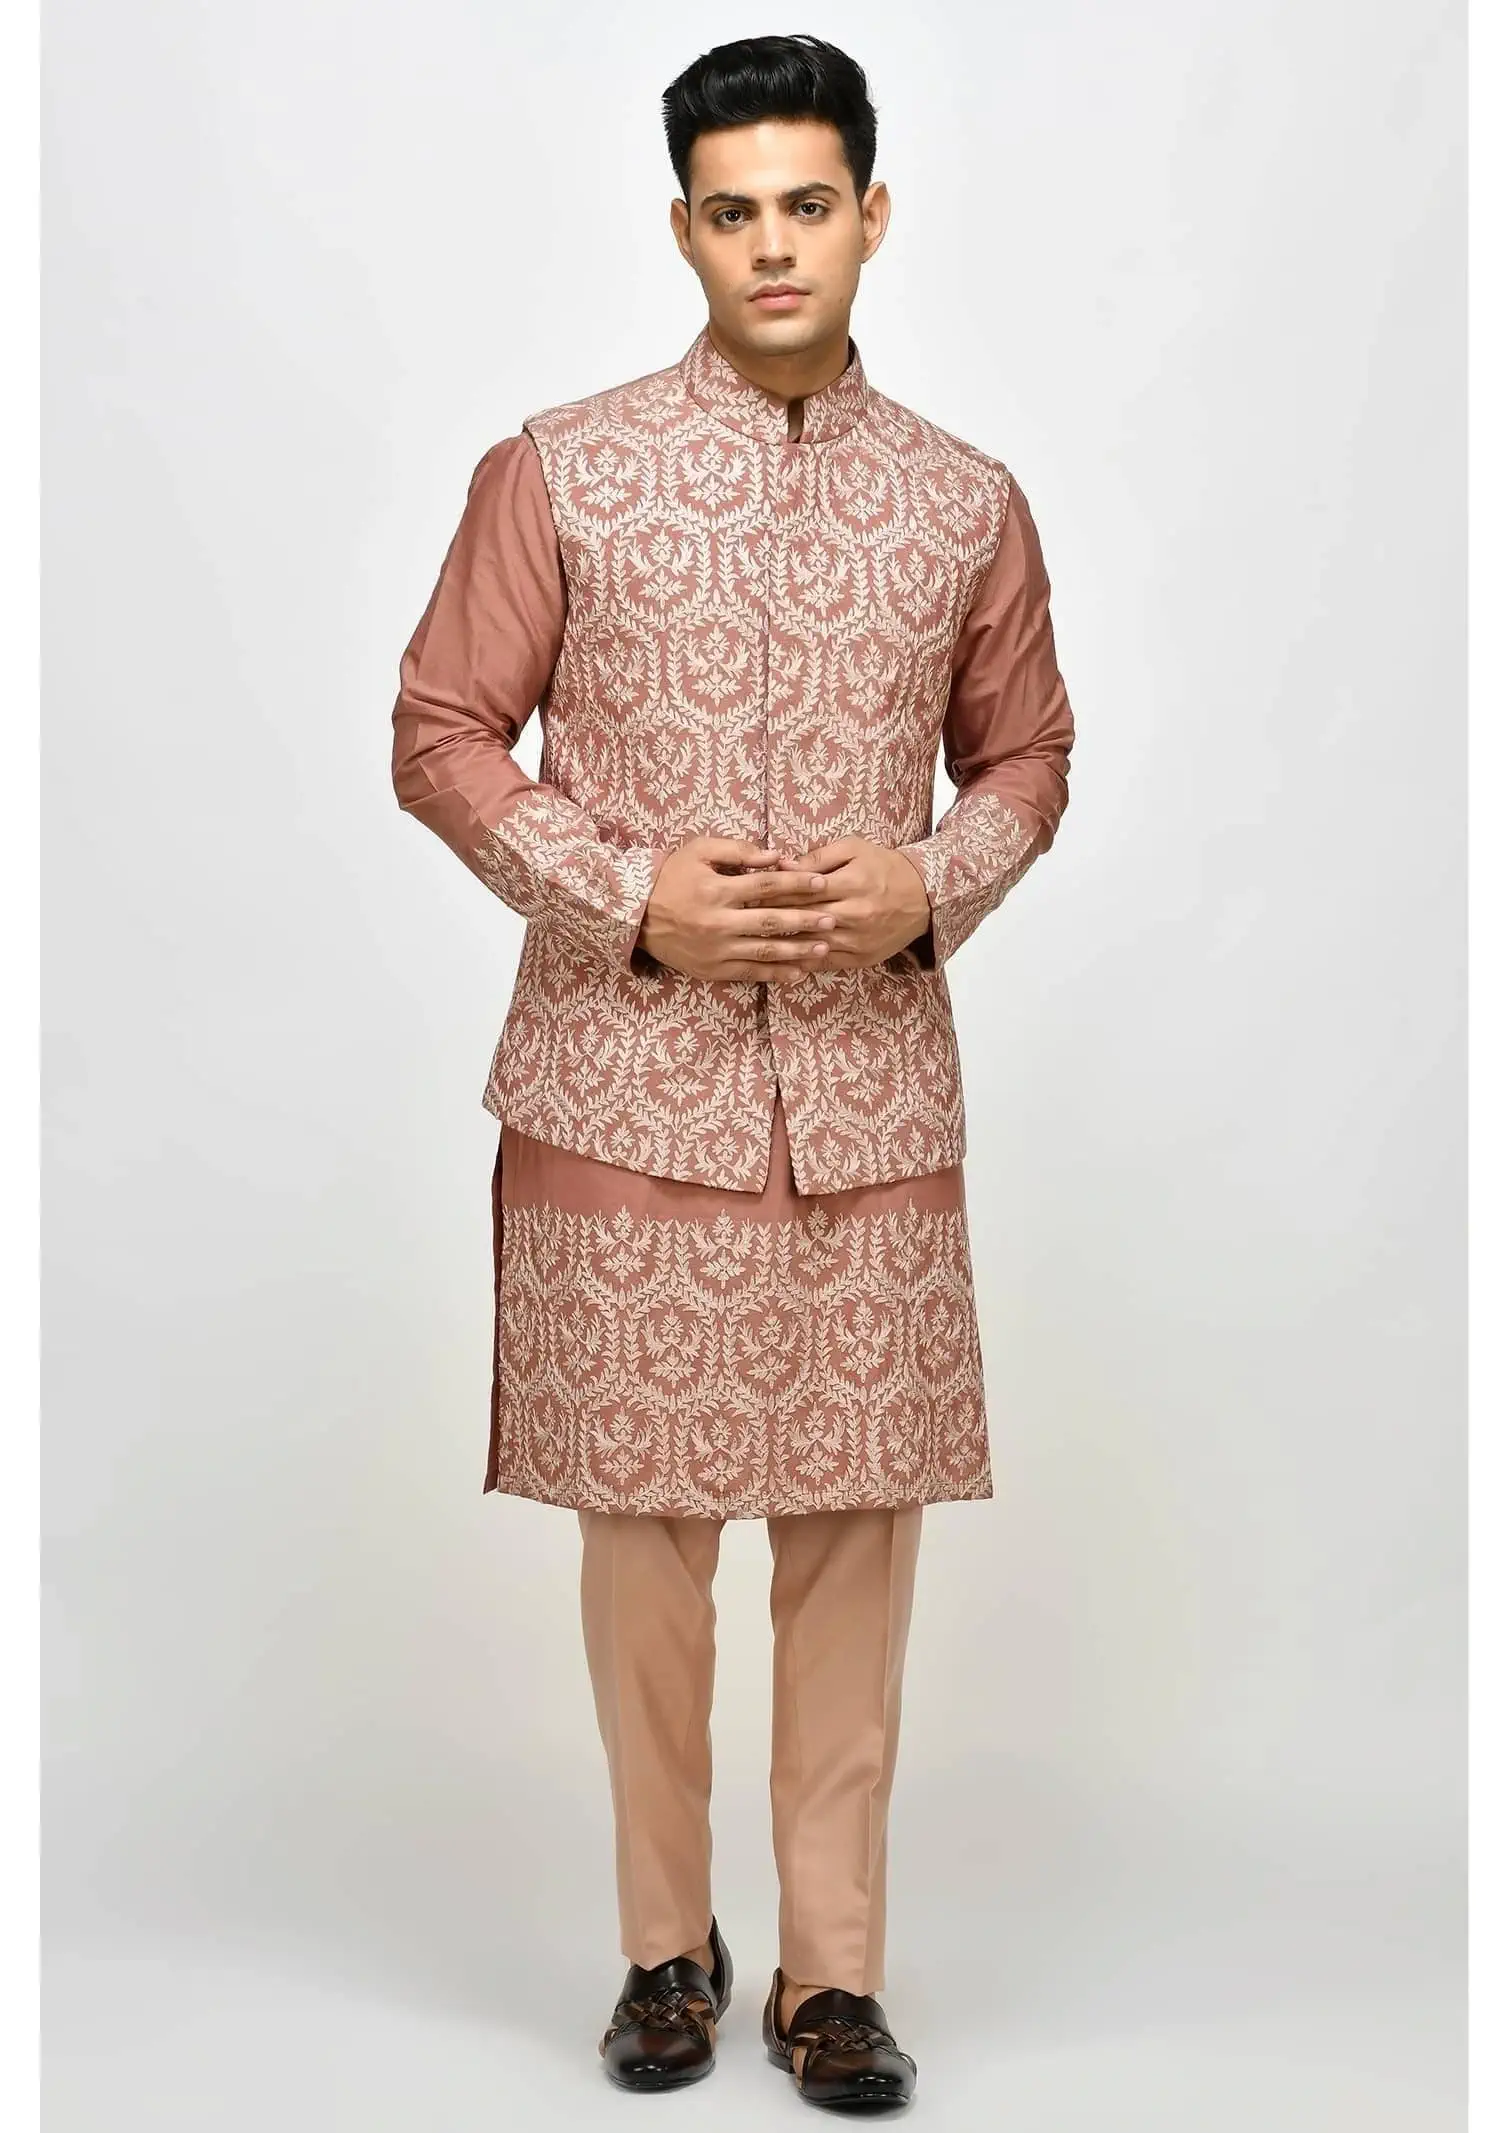 Dusty Rose Pink Embroidered Ethnic Kurta-Pajama - Groomsmen Outfit